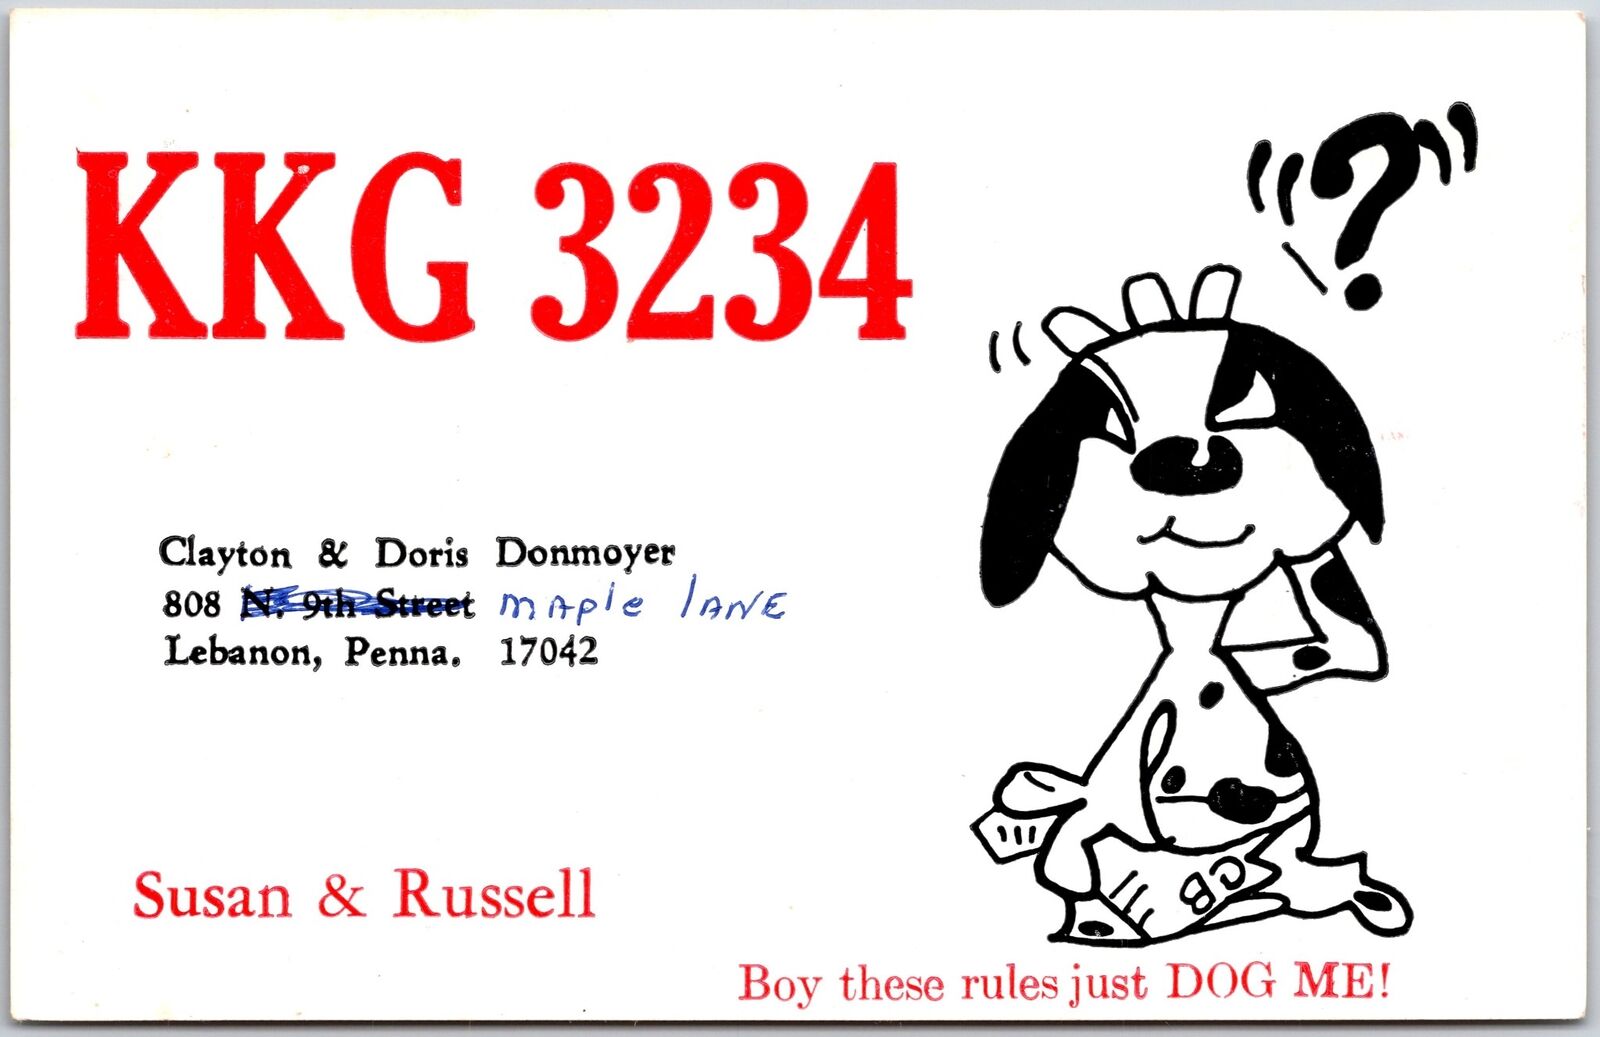 KKG 3234 Clayton & Doris Donmoyer Lebanon Penna Susan & Russel Postcard